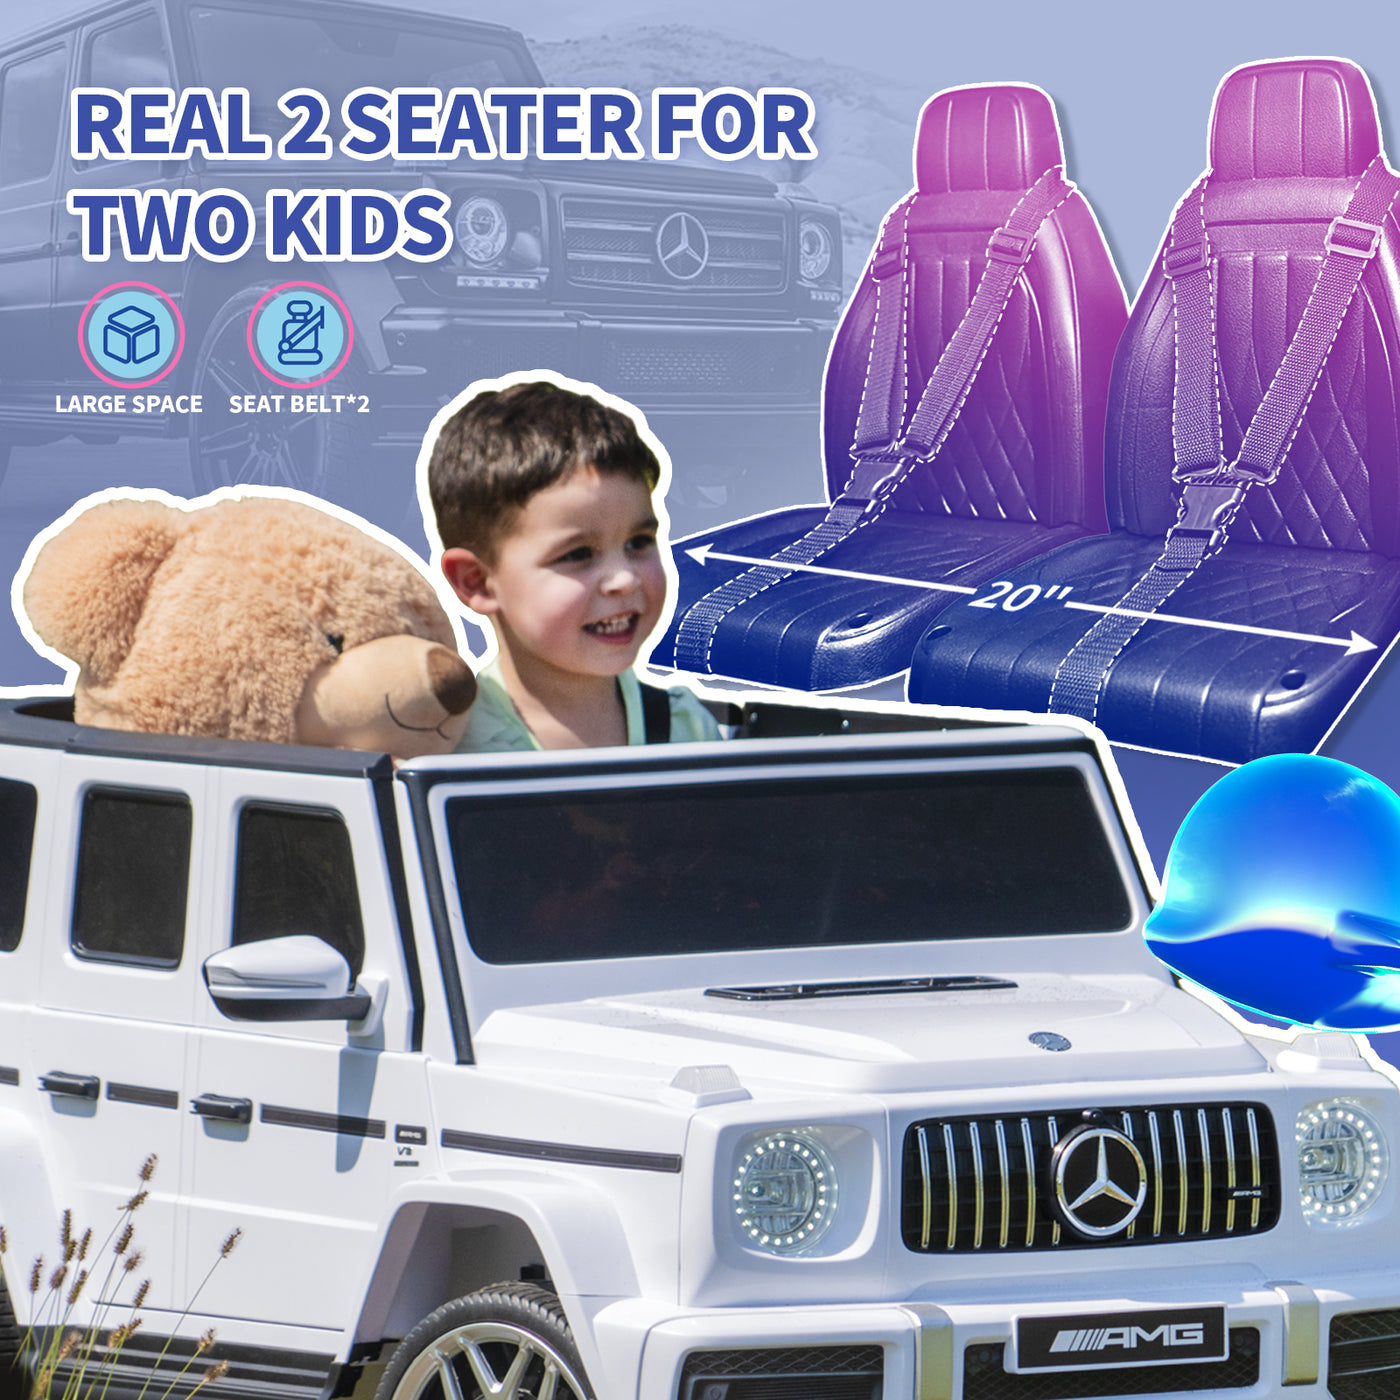 Joywhale 24V 2-Seater Kids Ride on Car Licensed Mercedes-Benz G63, with 7AH Big Battery, Remote Control, 4-Wheel Suspension, BW-G20L